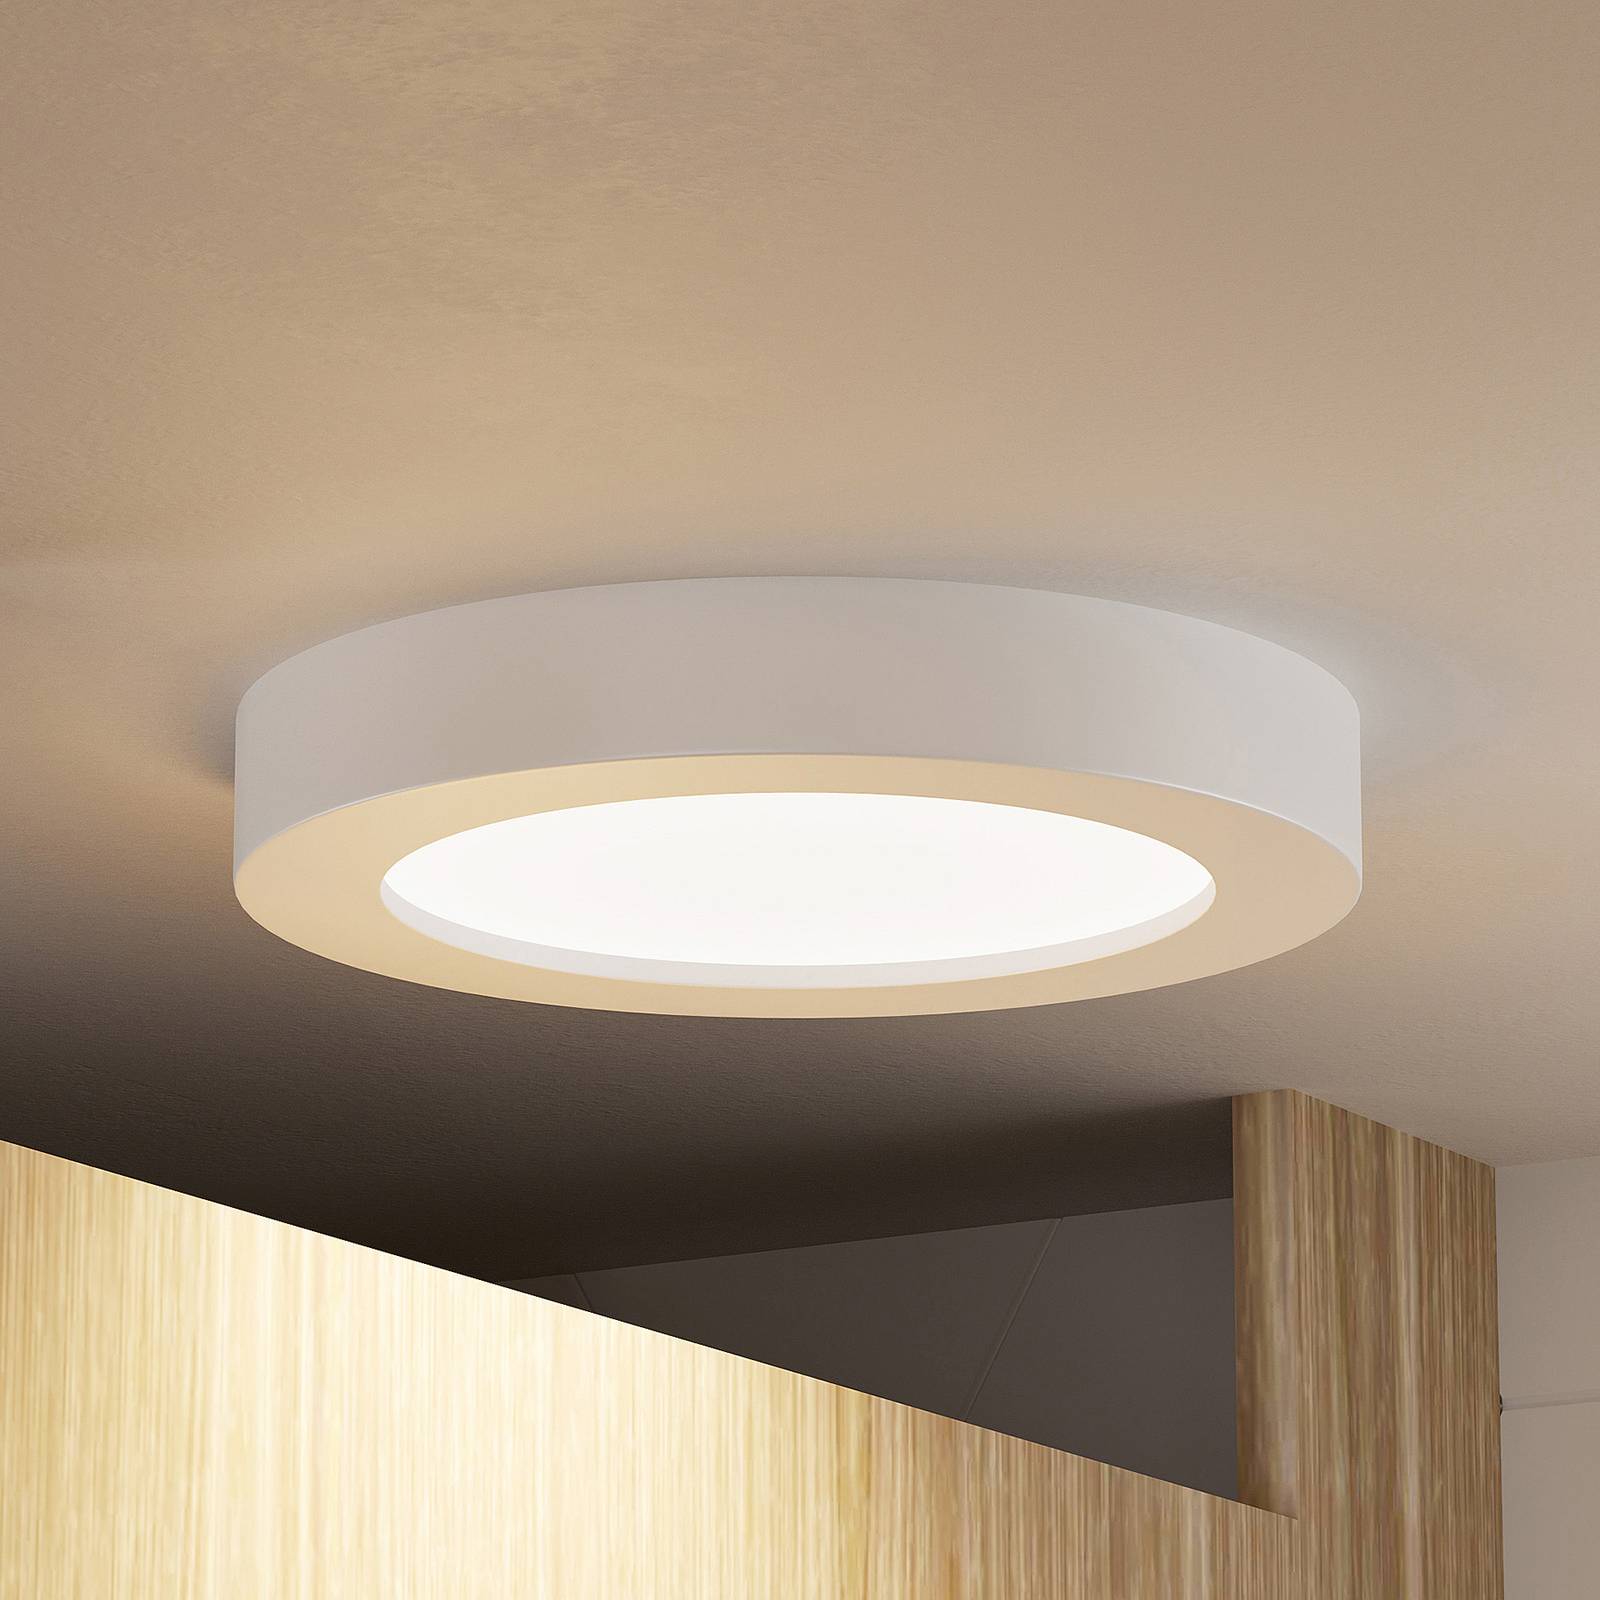 Image of Prios Edwina plafonnier LED, blanc, 22,6 cm 4251911706956